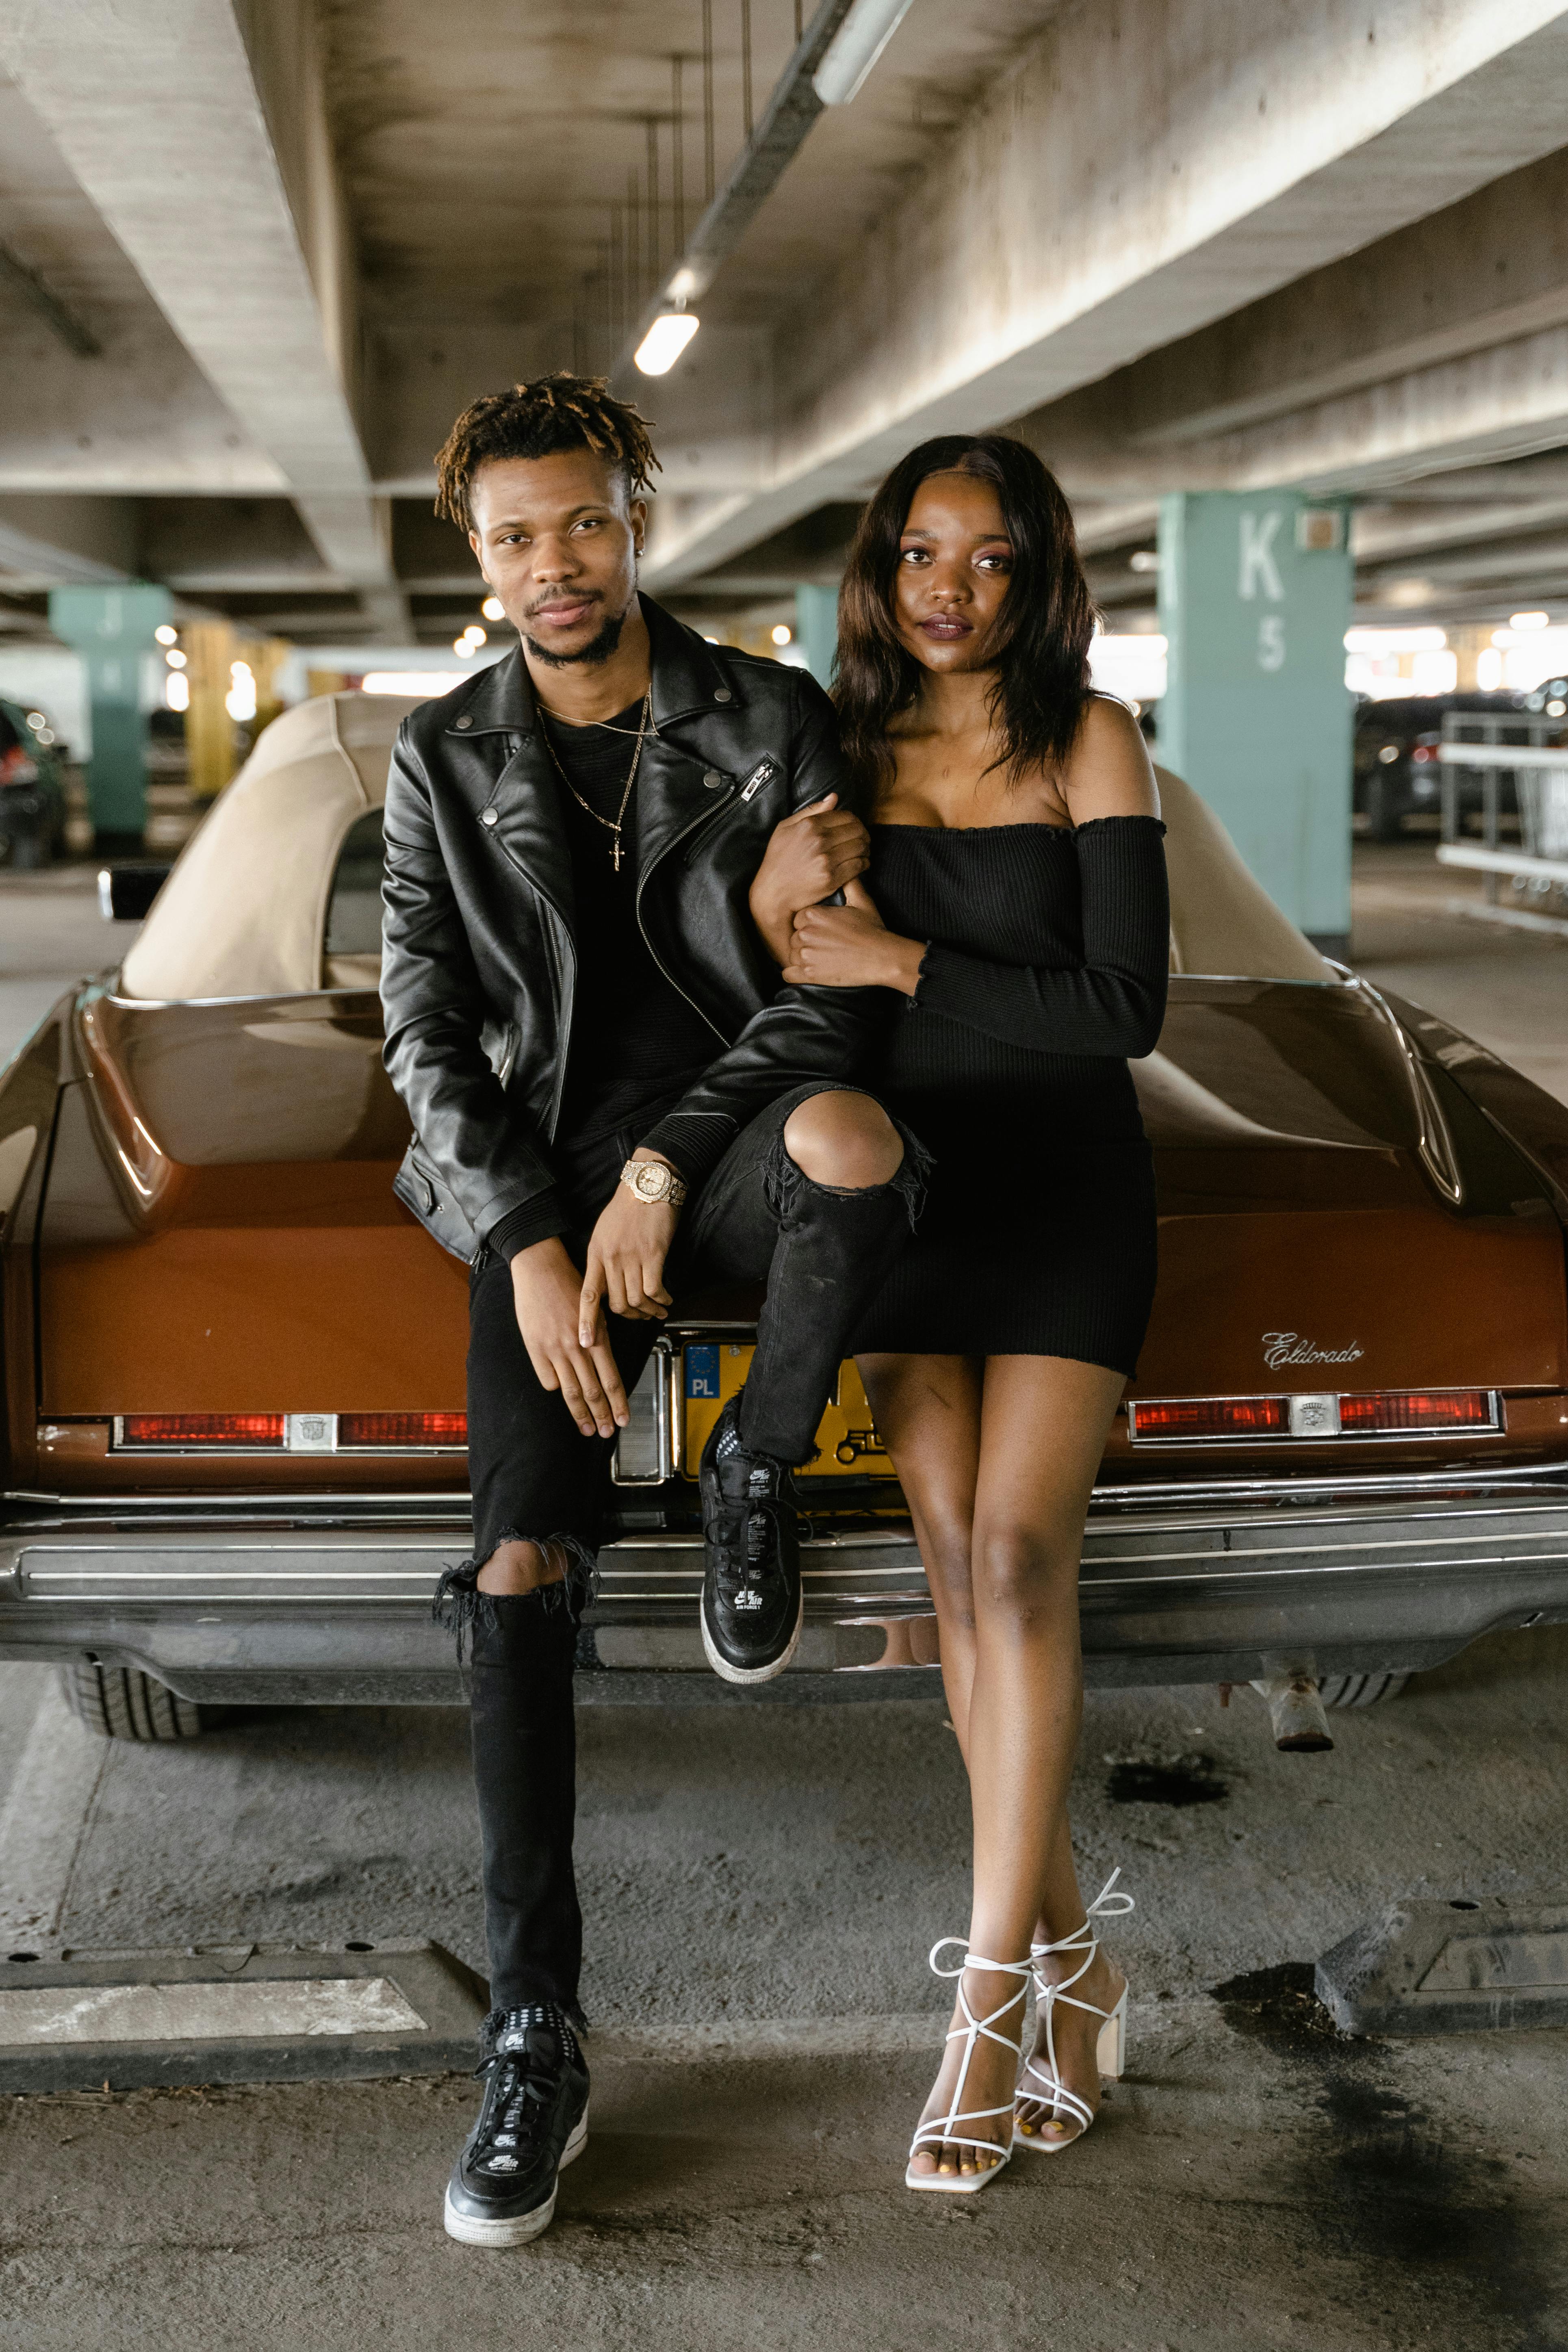 Car Couple Poses Ideas 2021 | Girlfriend-Boyfriend Photography Ideas With  Car - YouTube